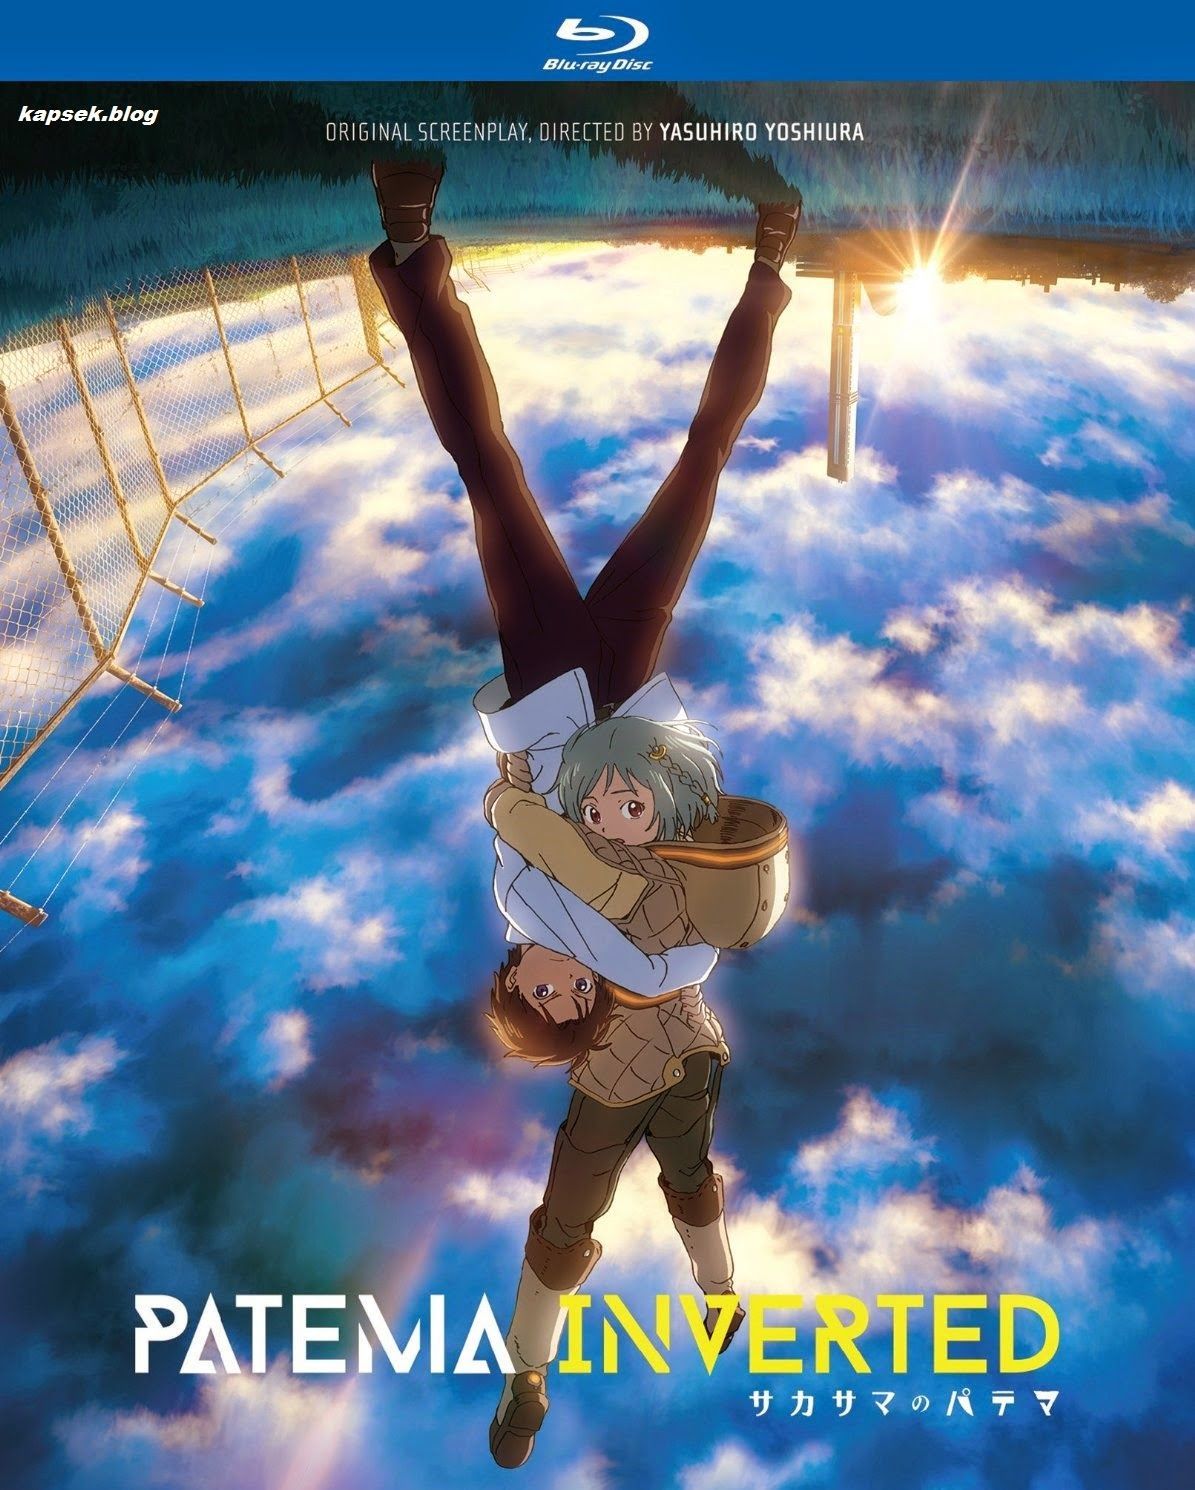 Patema Inverted new movie HD wallpaper. Japanese animated movies, Anime movies, Anime films